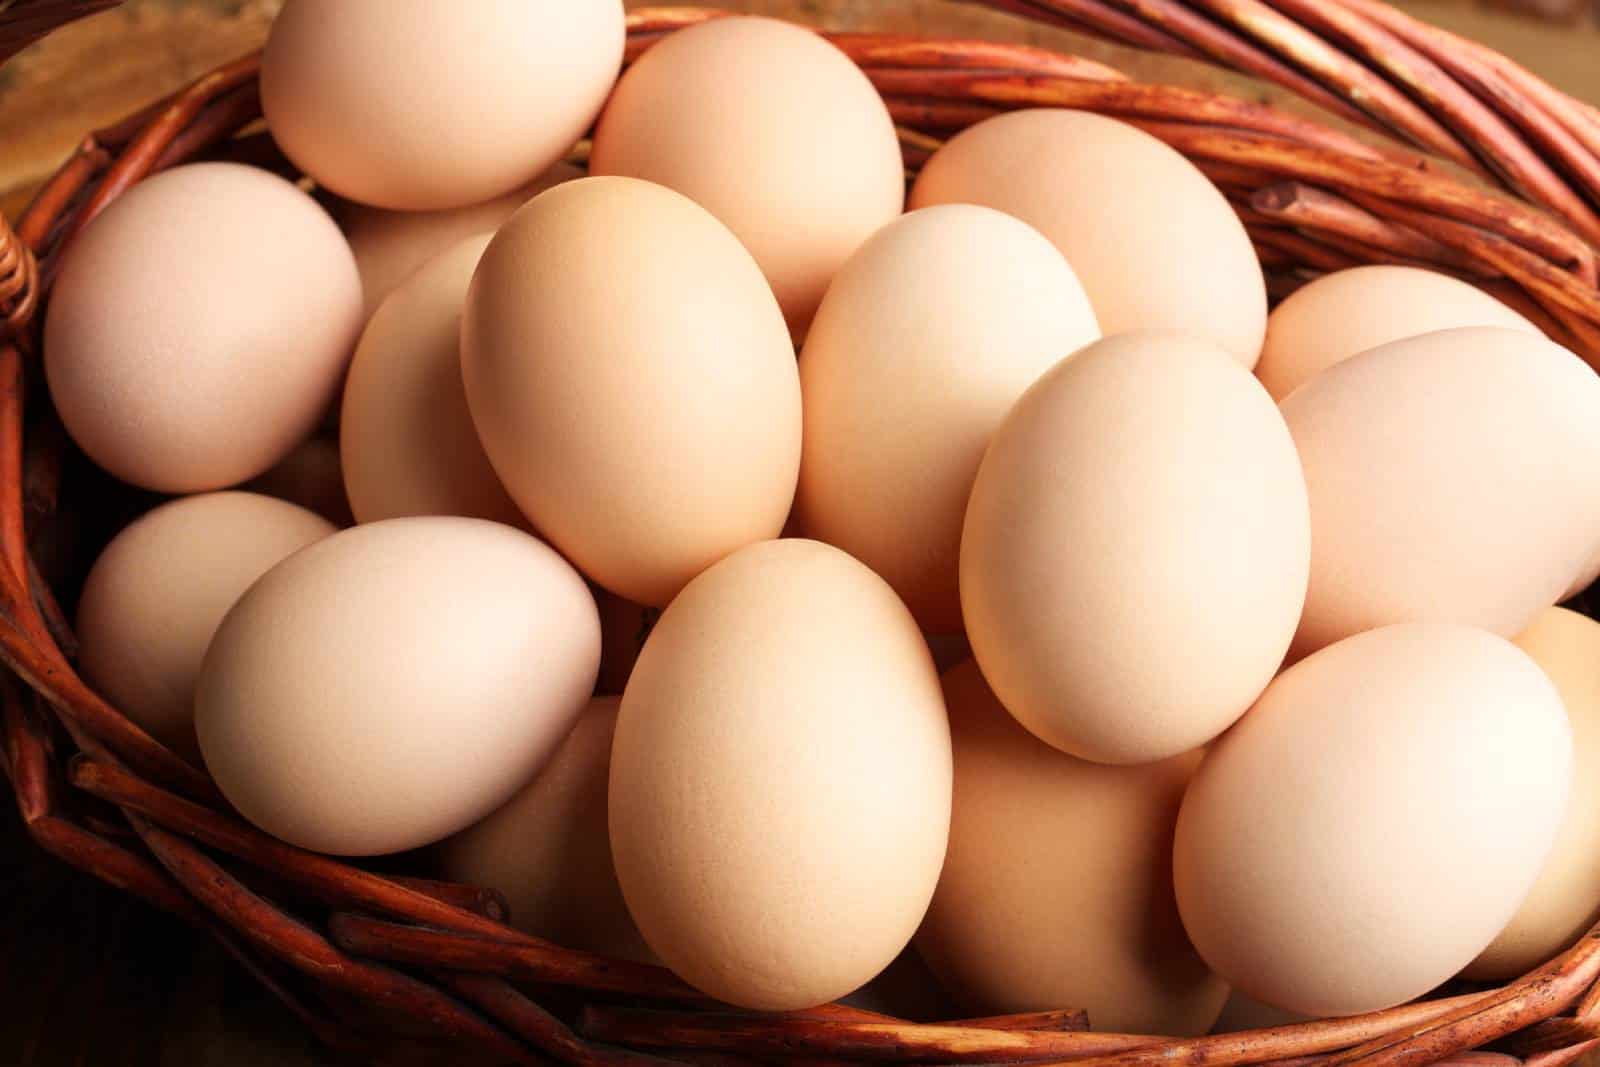 eggs in basket - Scrotal Enhancement